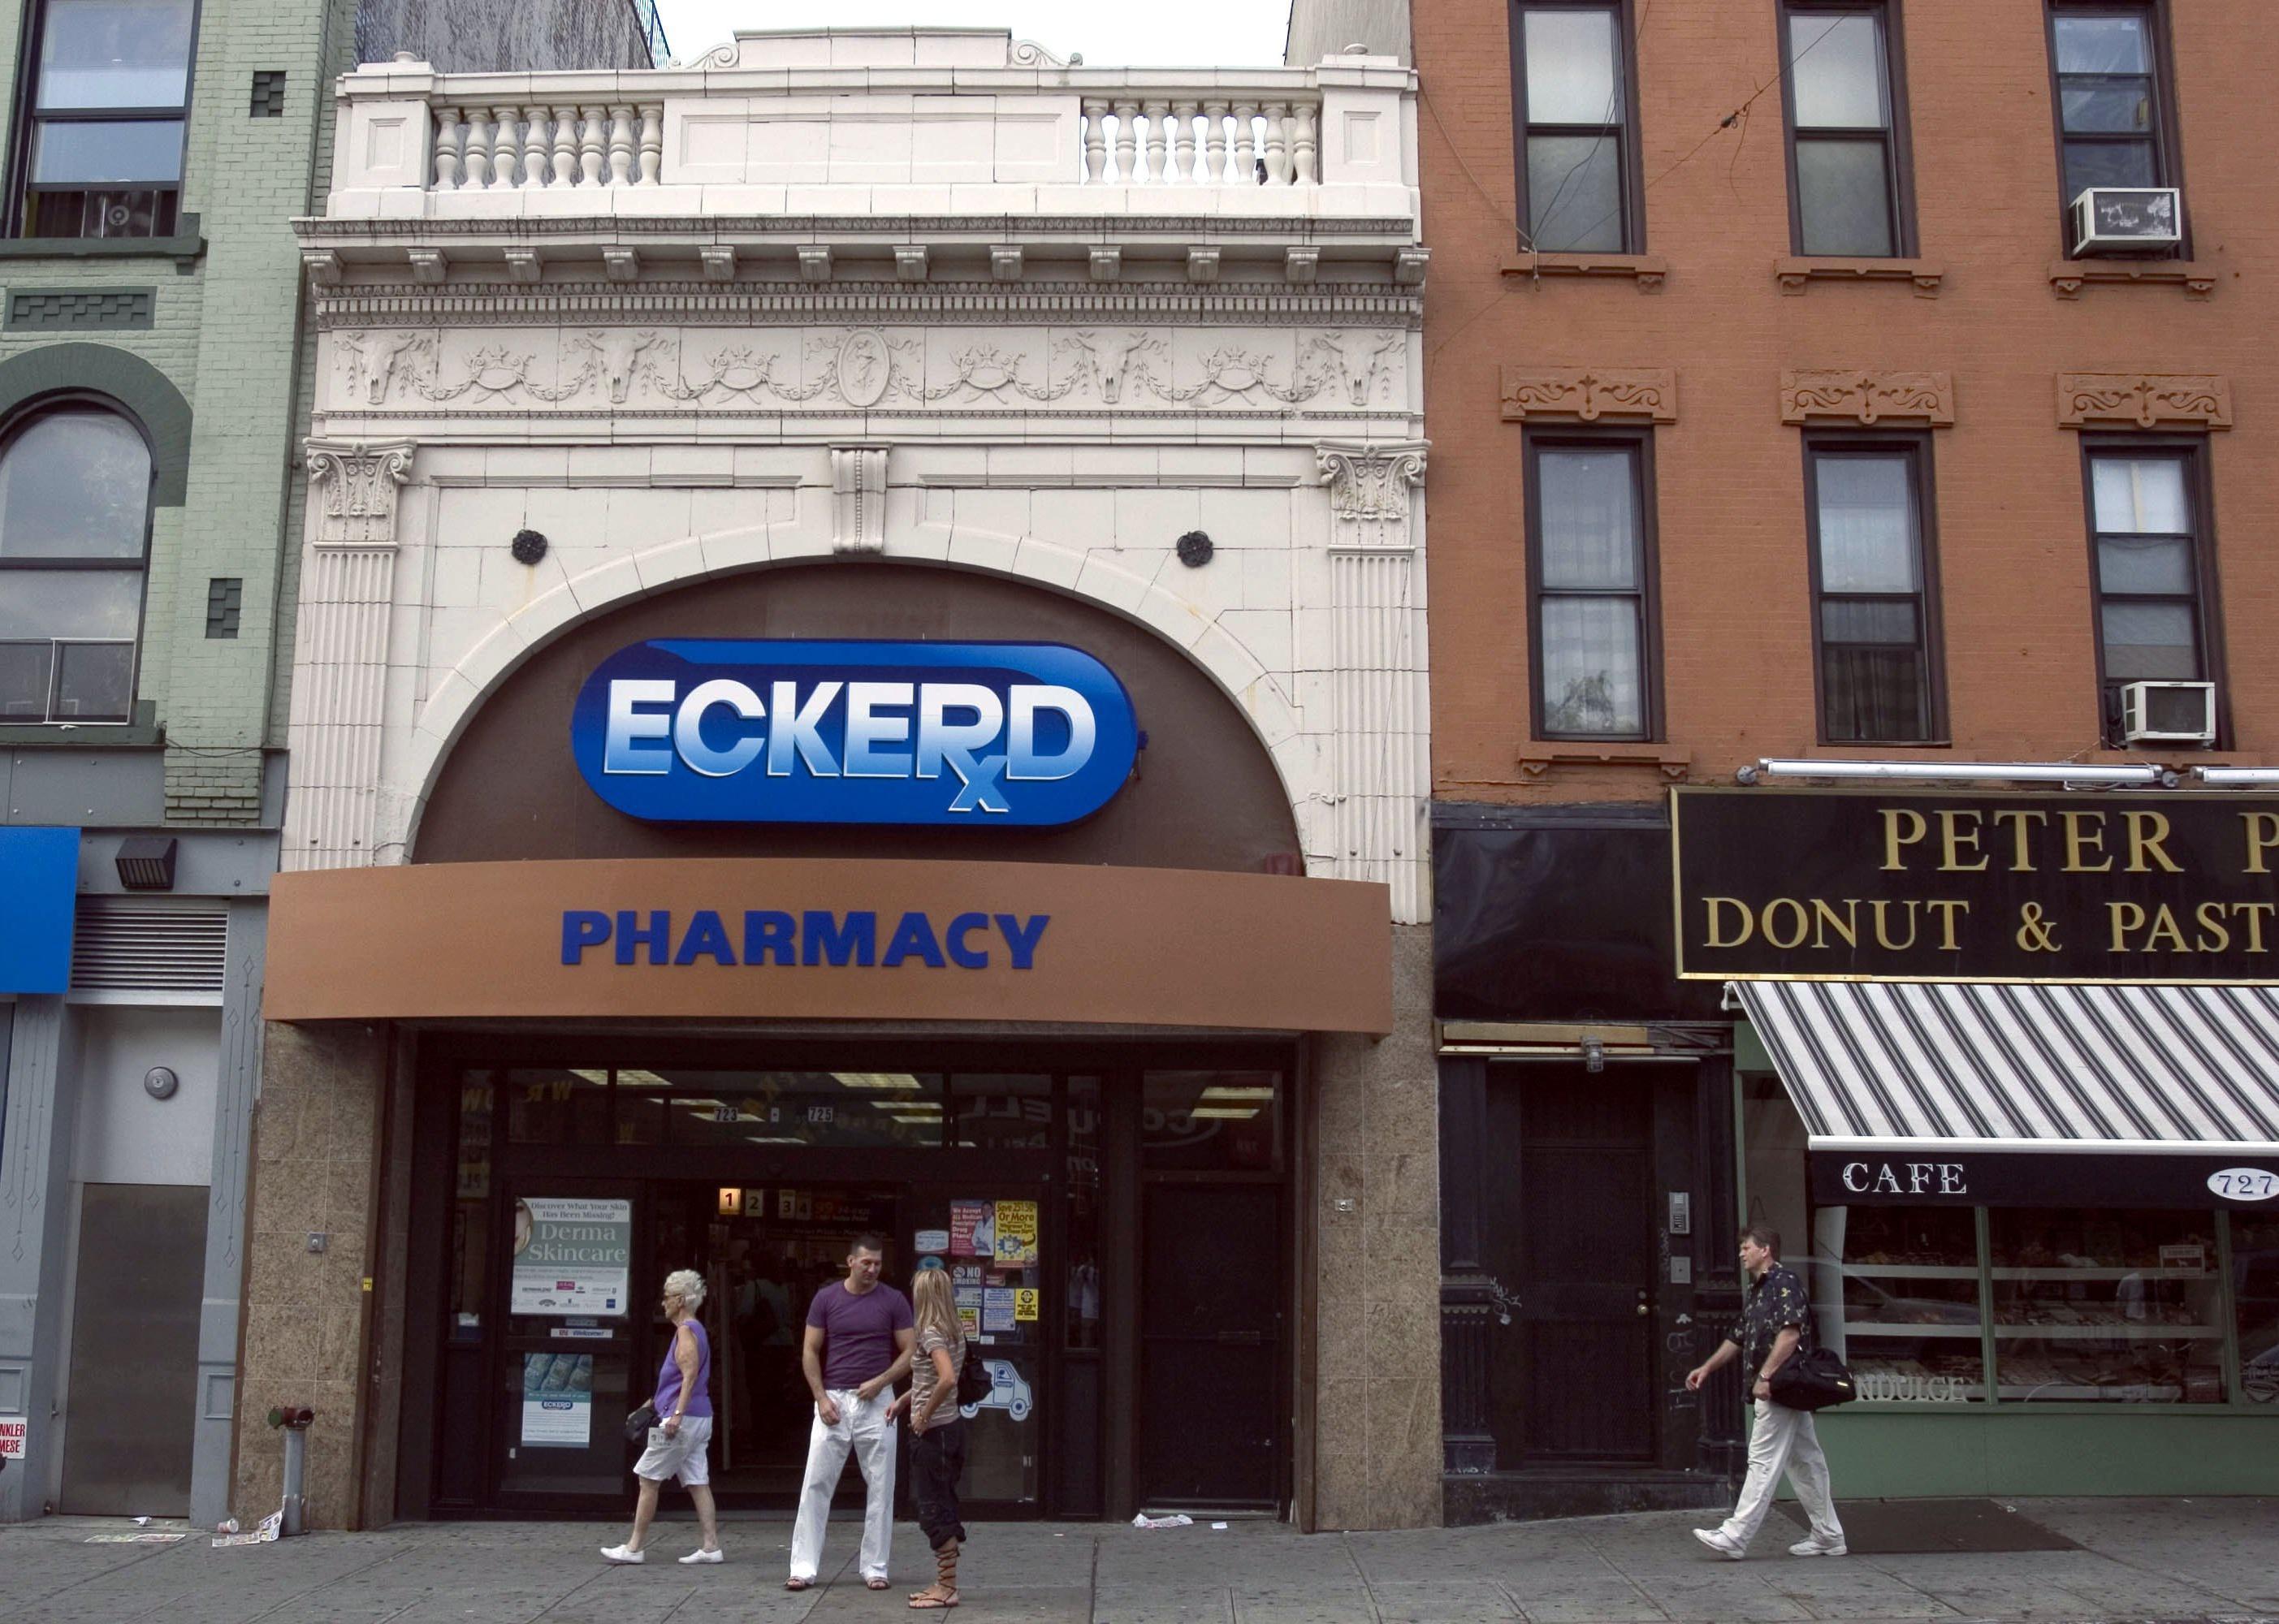 People standing on the sidewalk in front of Eckerd's Pharmacy.